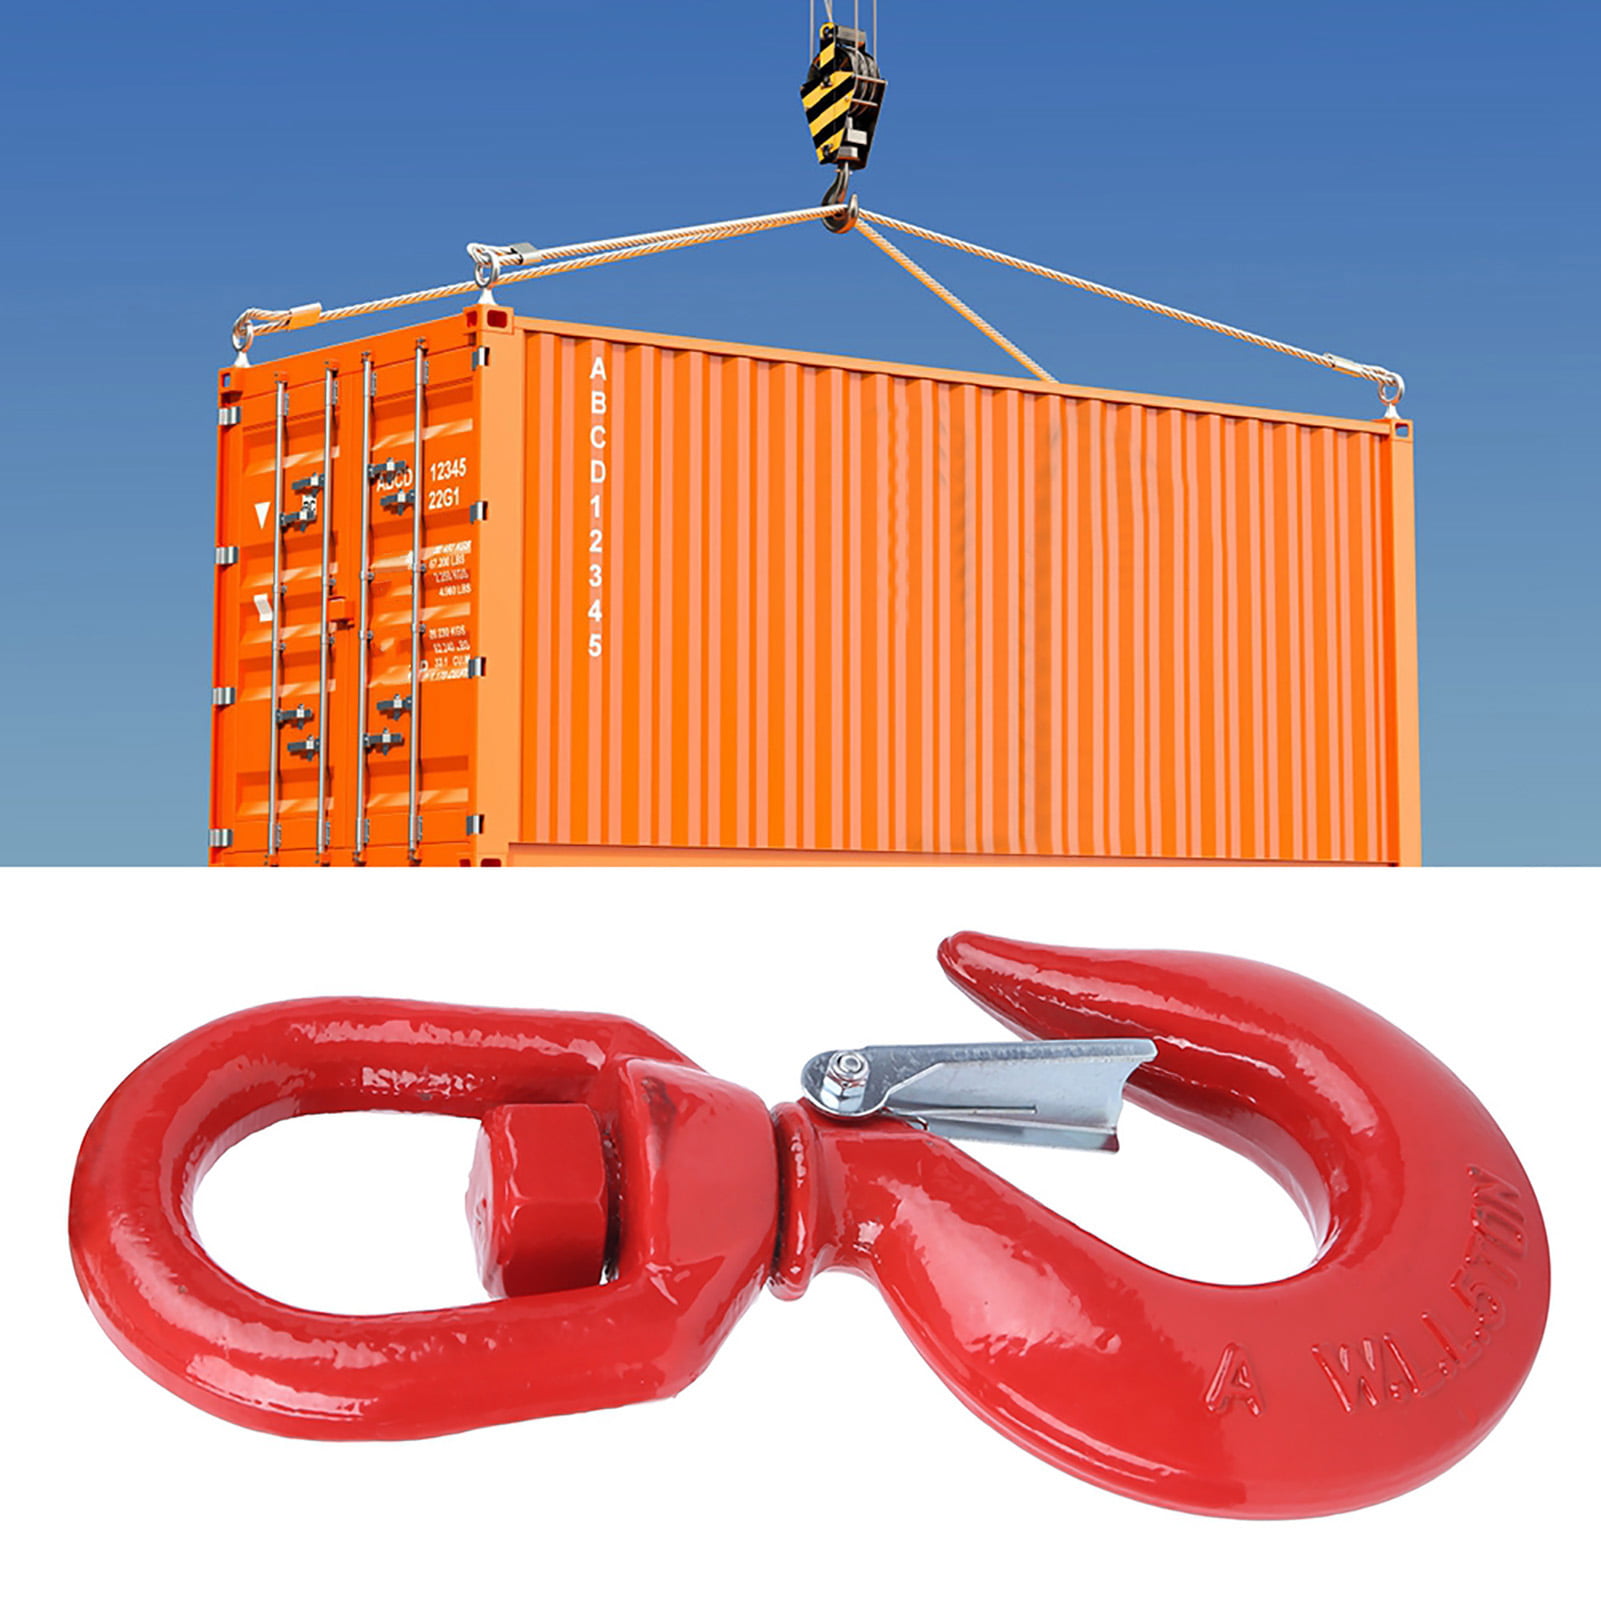 Swivel Eyelet Hook Gravity rig for Factory Lifting Civil Engineering Port Transport Alloy Steel Anti-Crack Lifting Hook